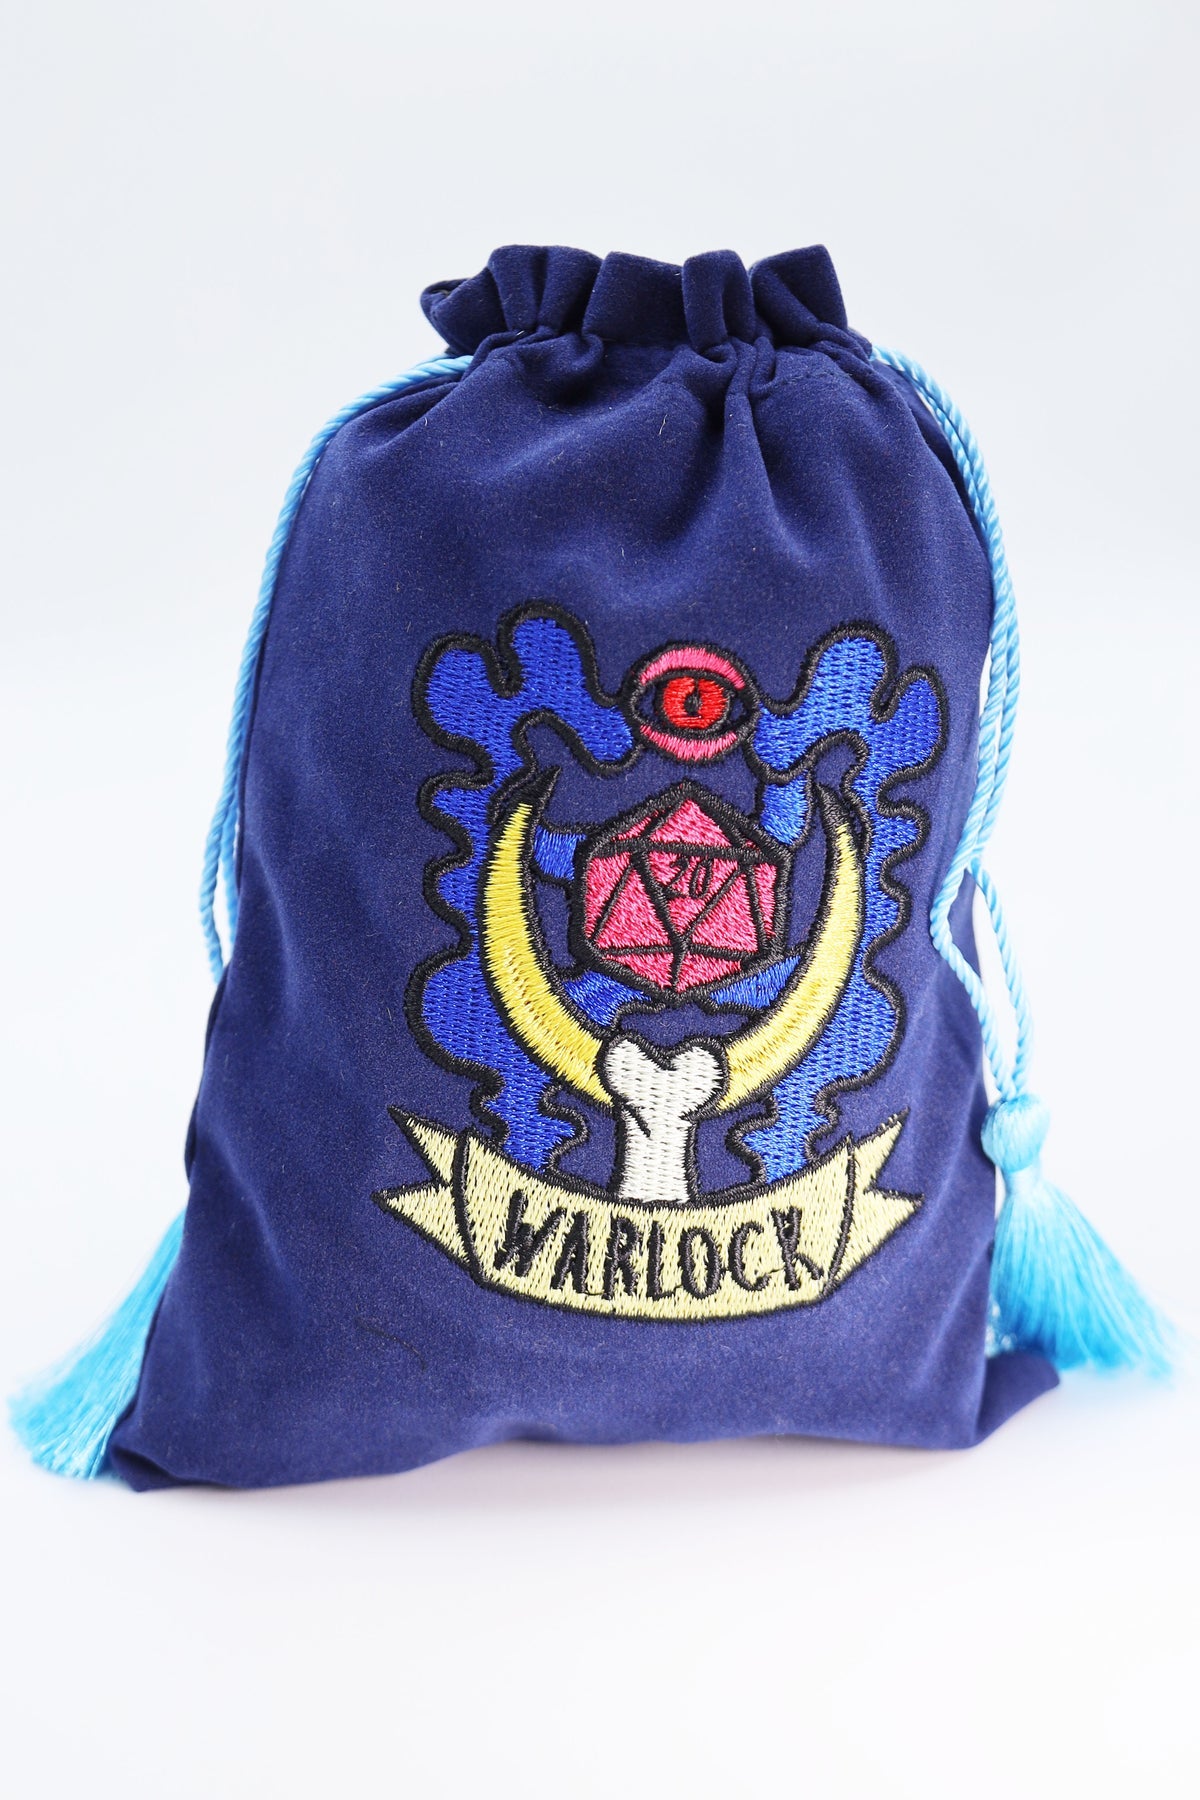 Velvet Dice Bags: Warlock | GrognardGamesBatavia